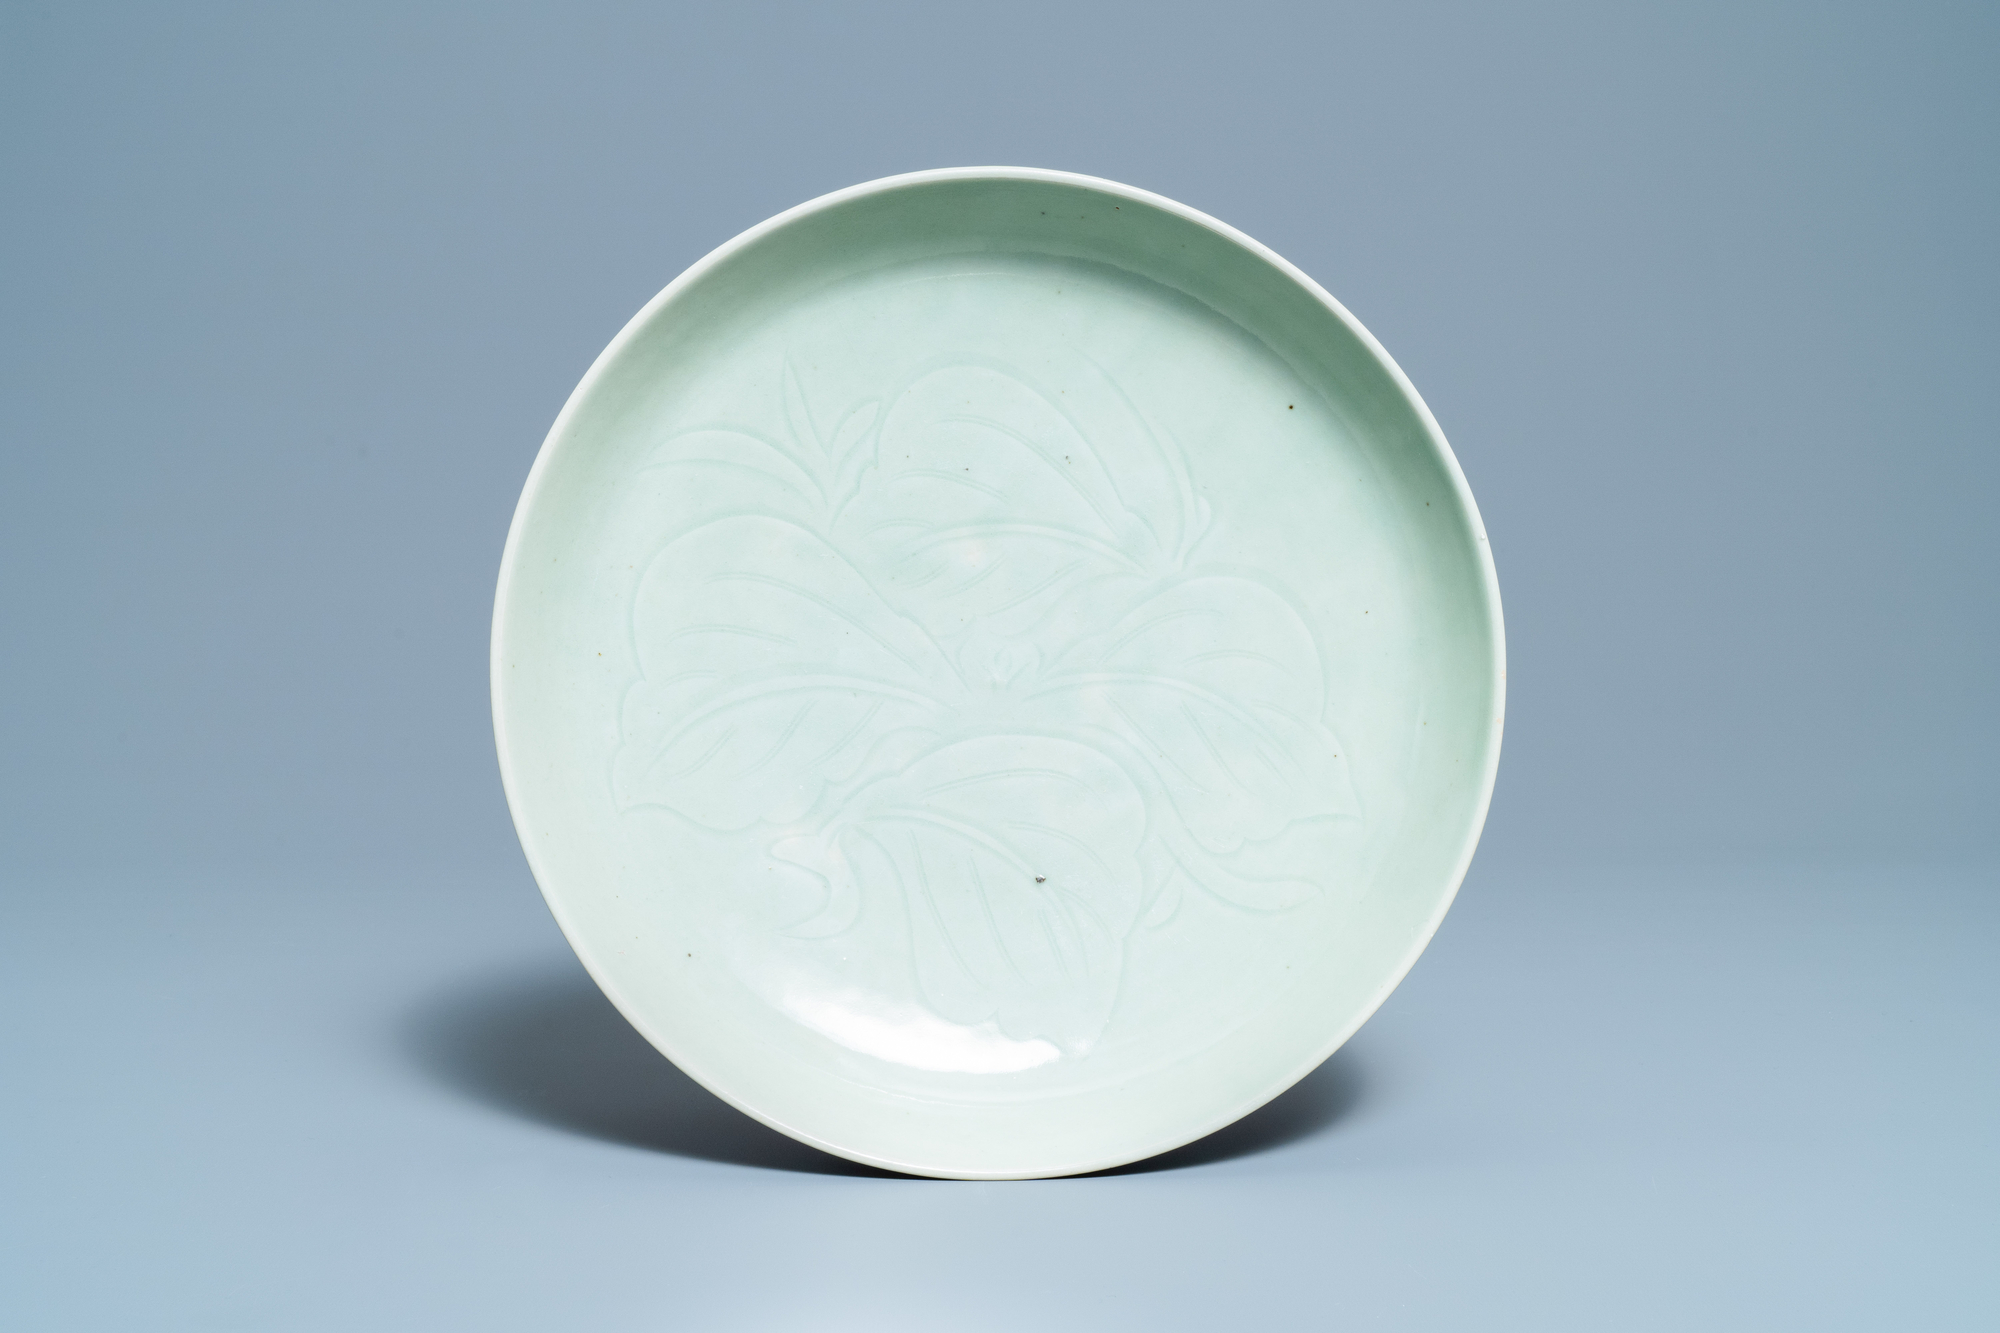 A Chinese monochrome celadon-glazed dish with underglaze floral design, 18/19th C.